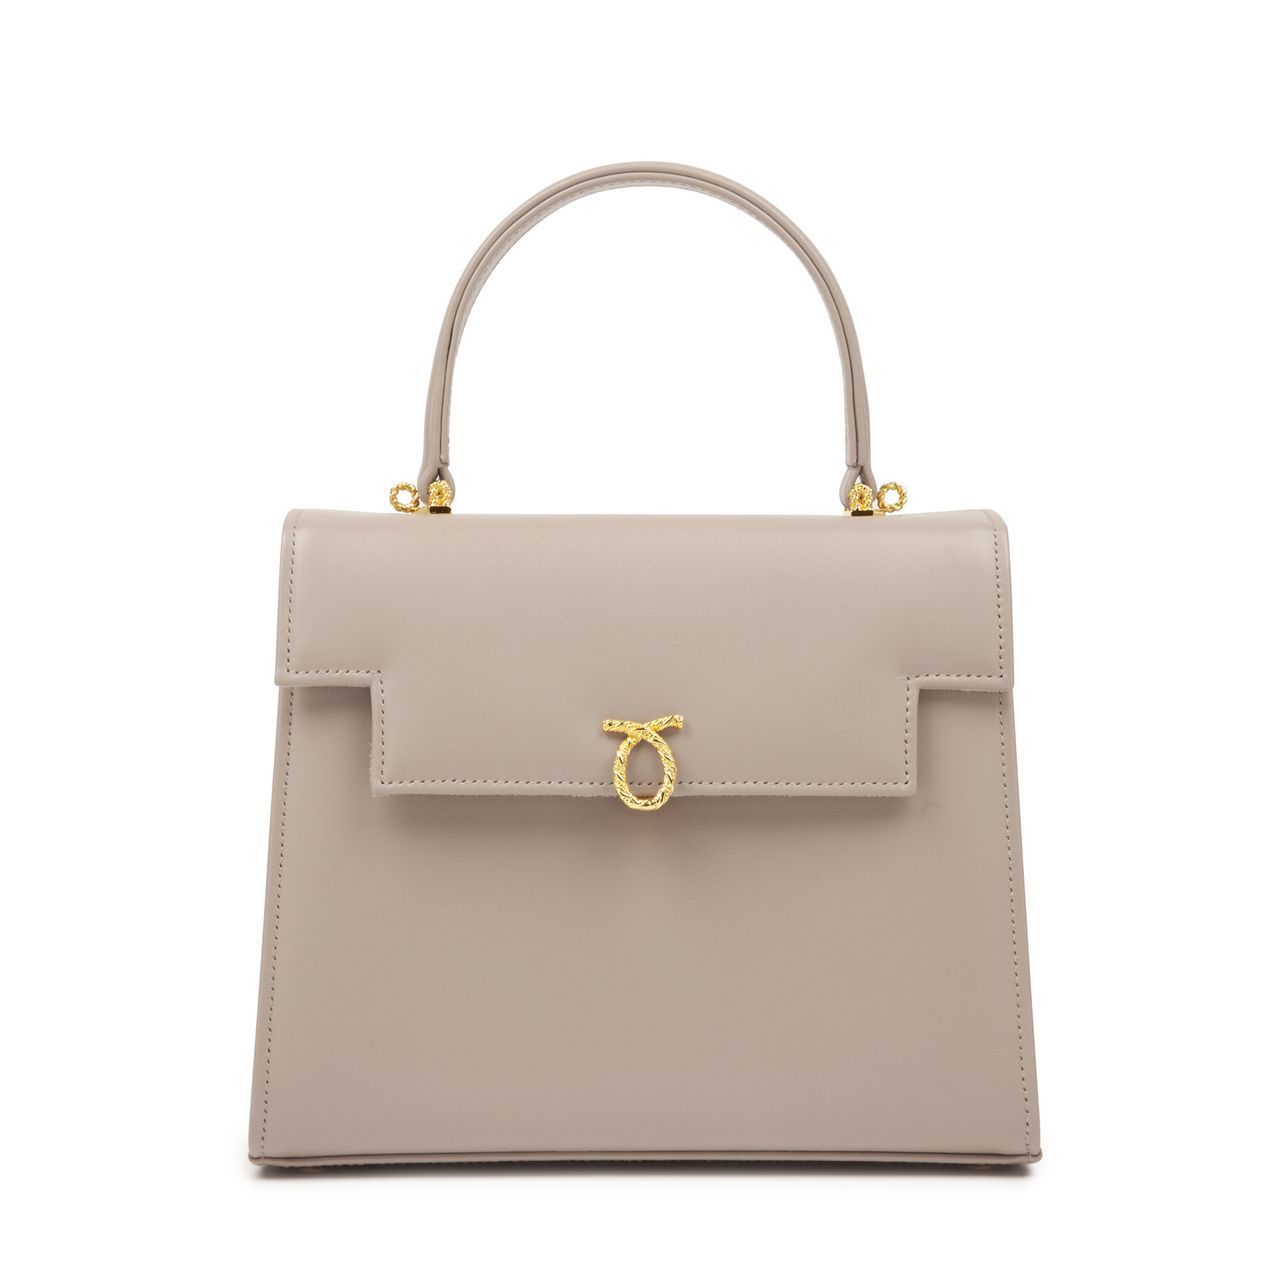 Launer Handbags: Launer London Customizable Adagio Handbag